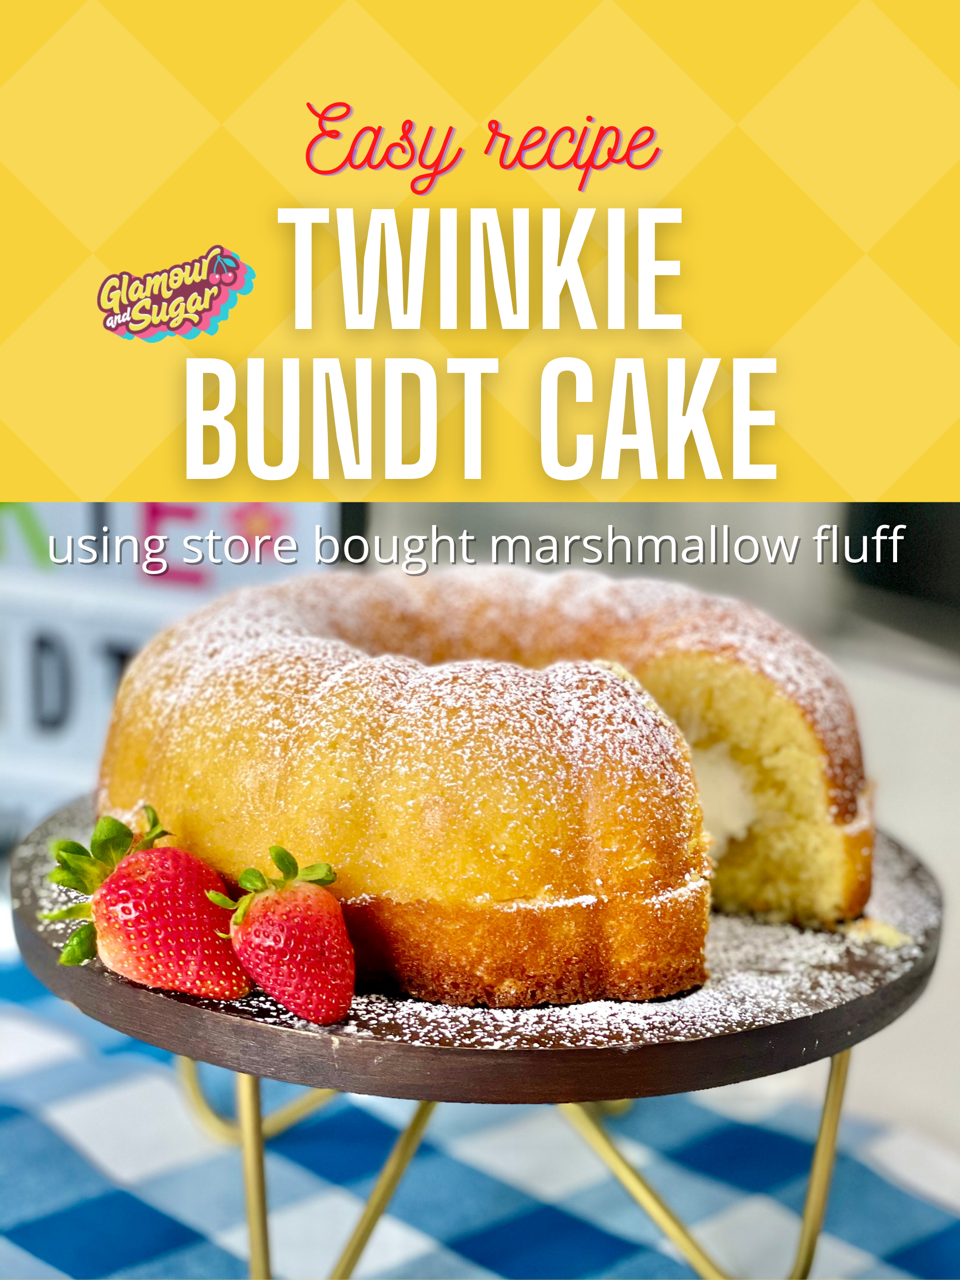 Twinkie Bundt Cake - Glamour and Sugar